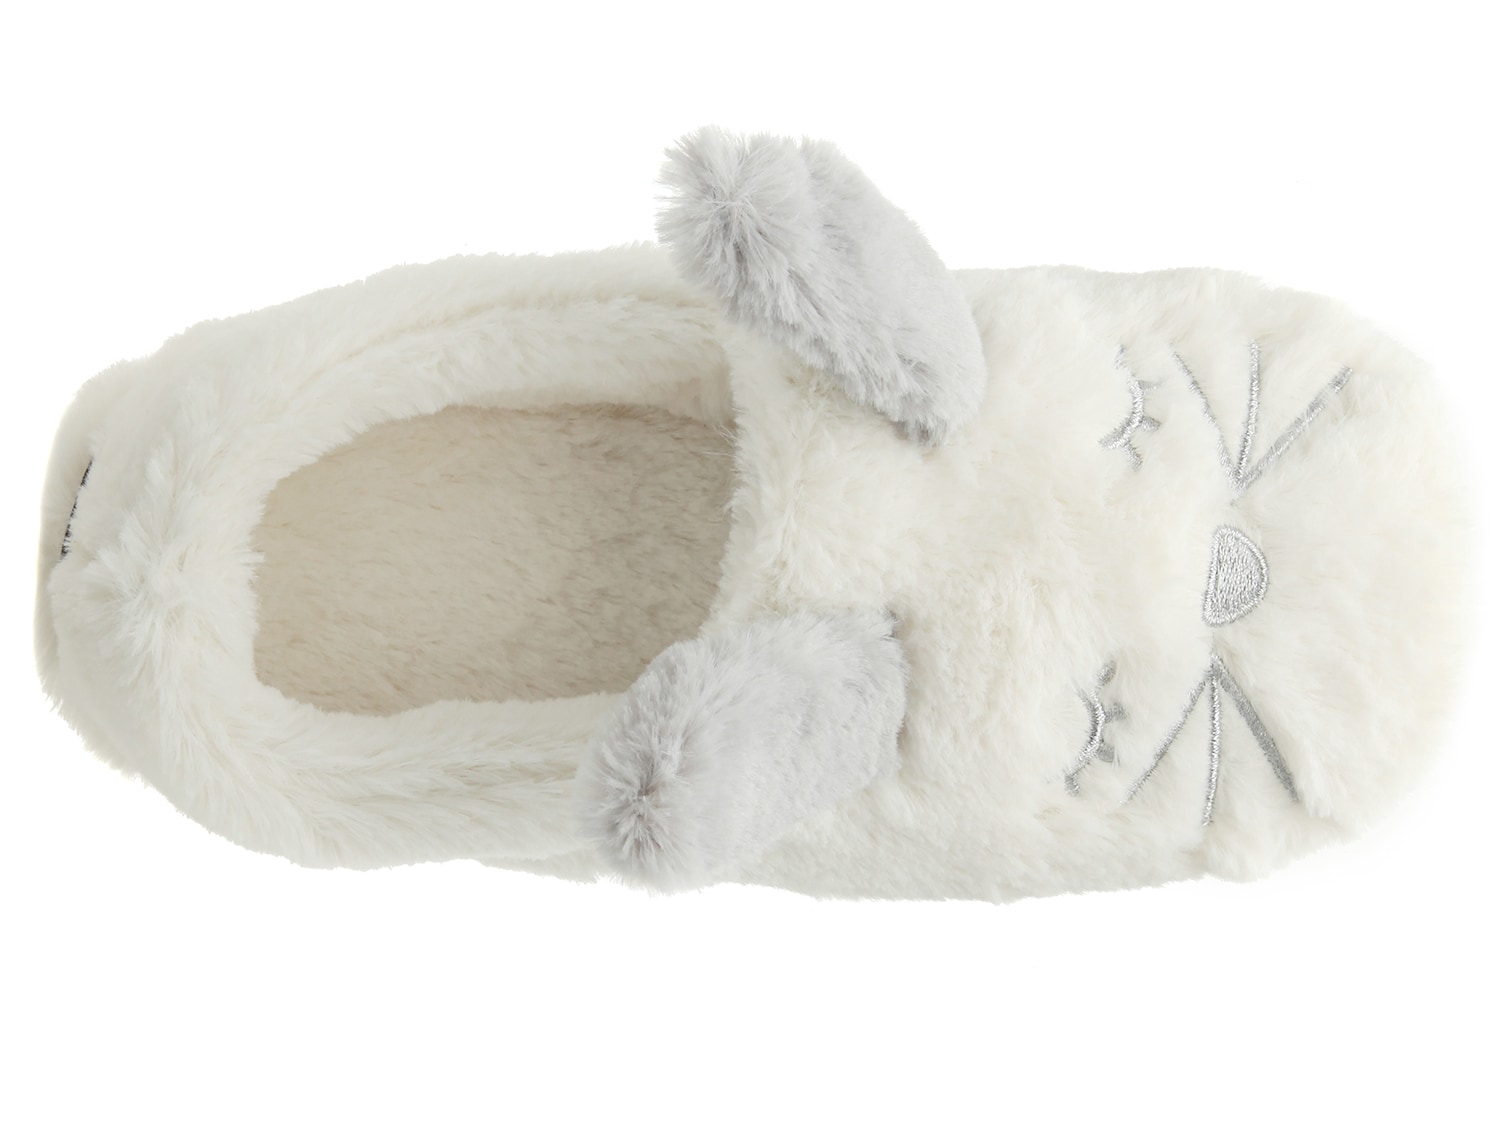 dsw bunny slippers